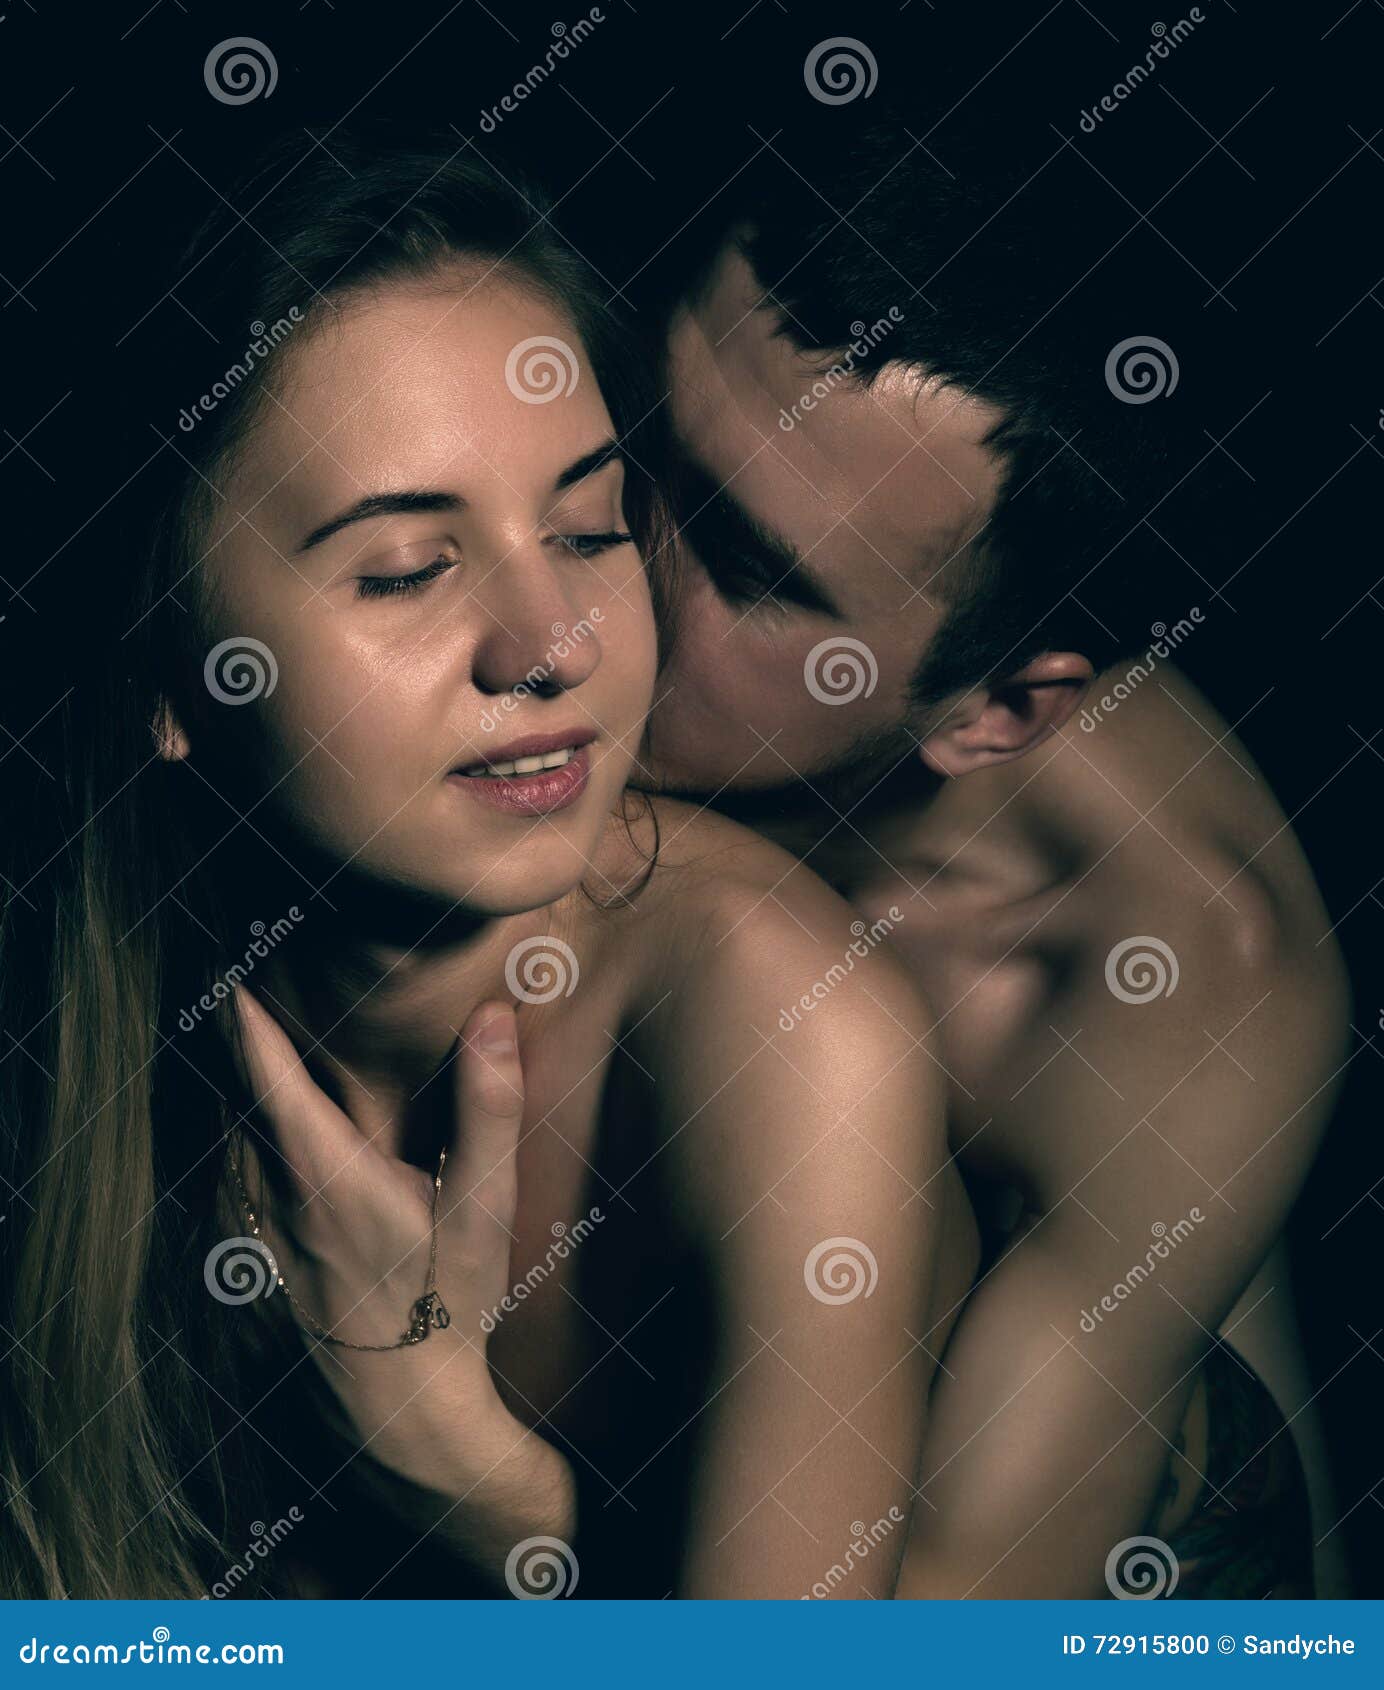 Porn Guy Biting Boobs